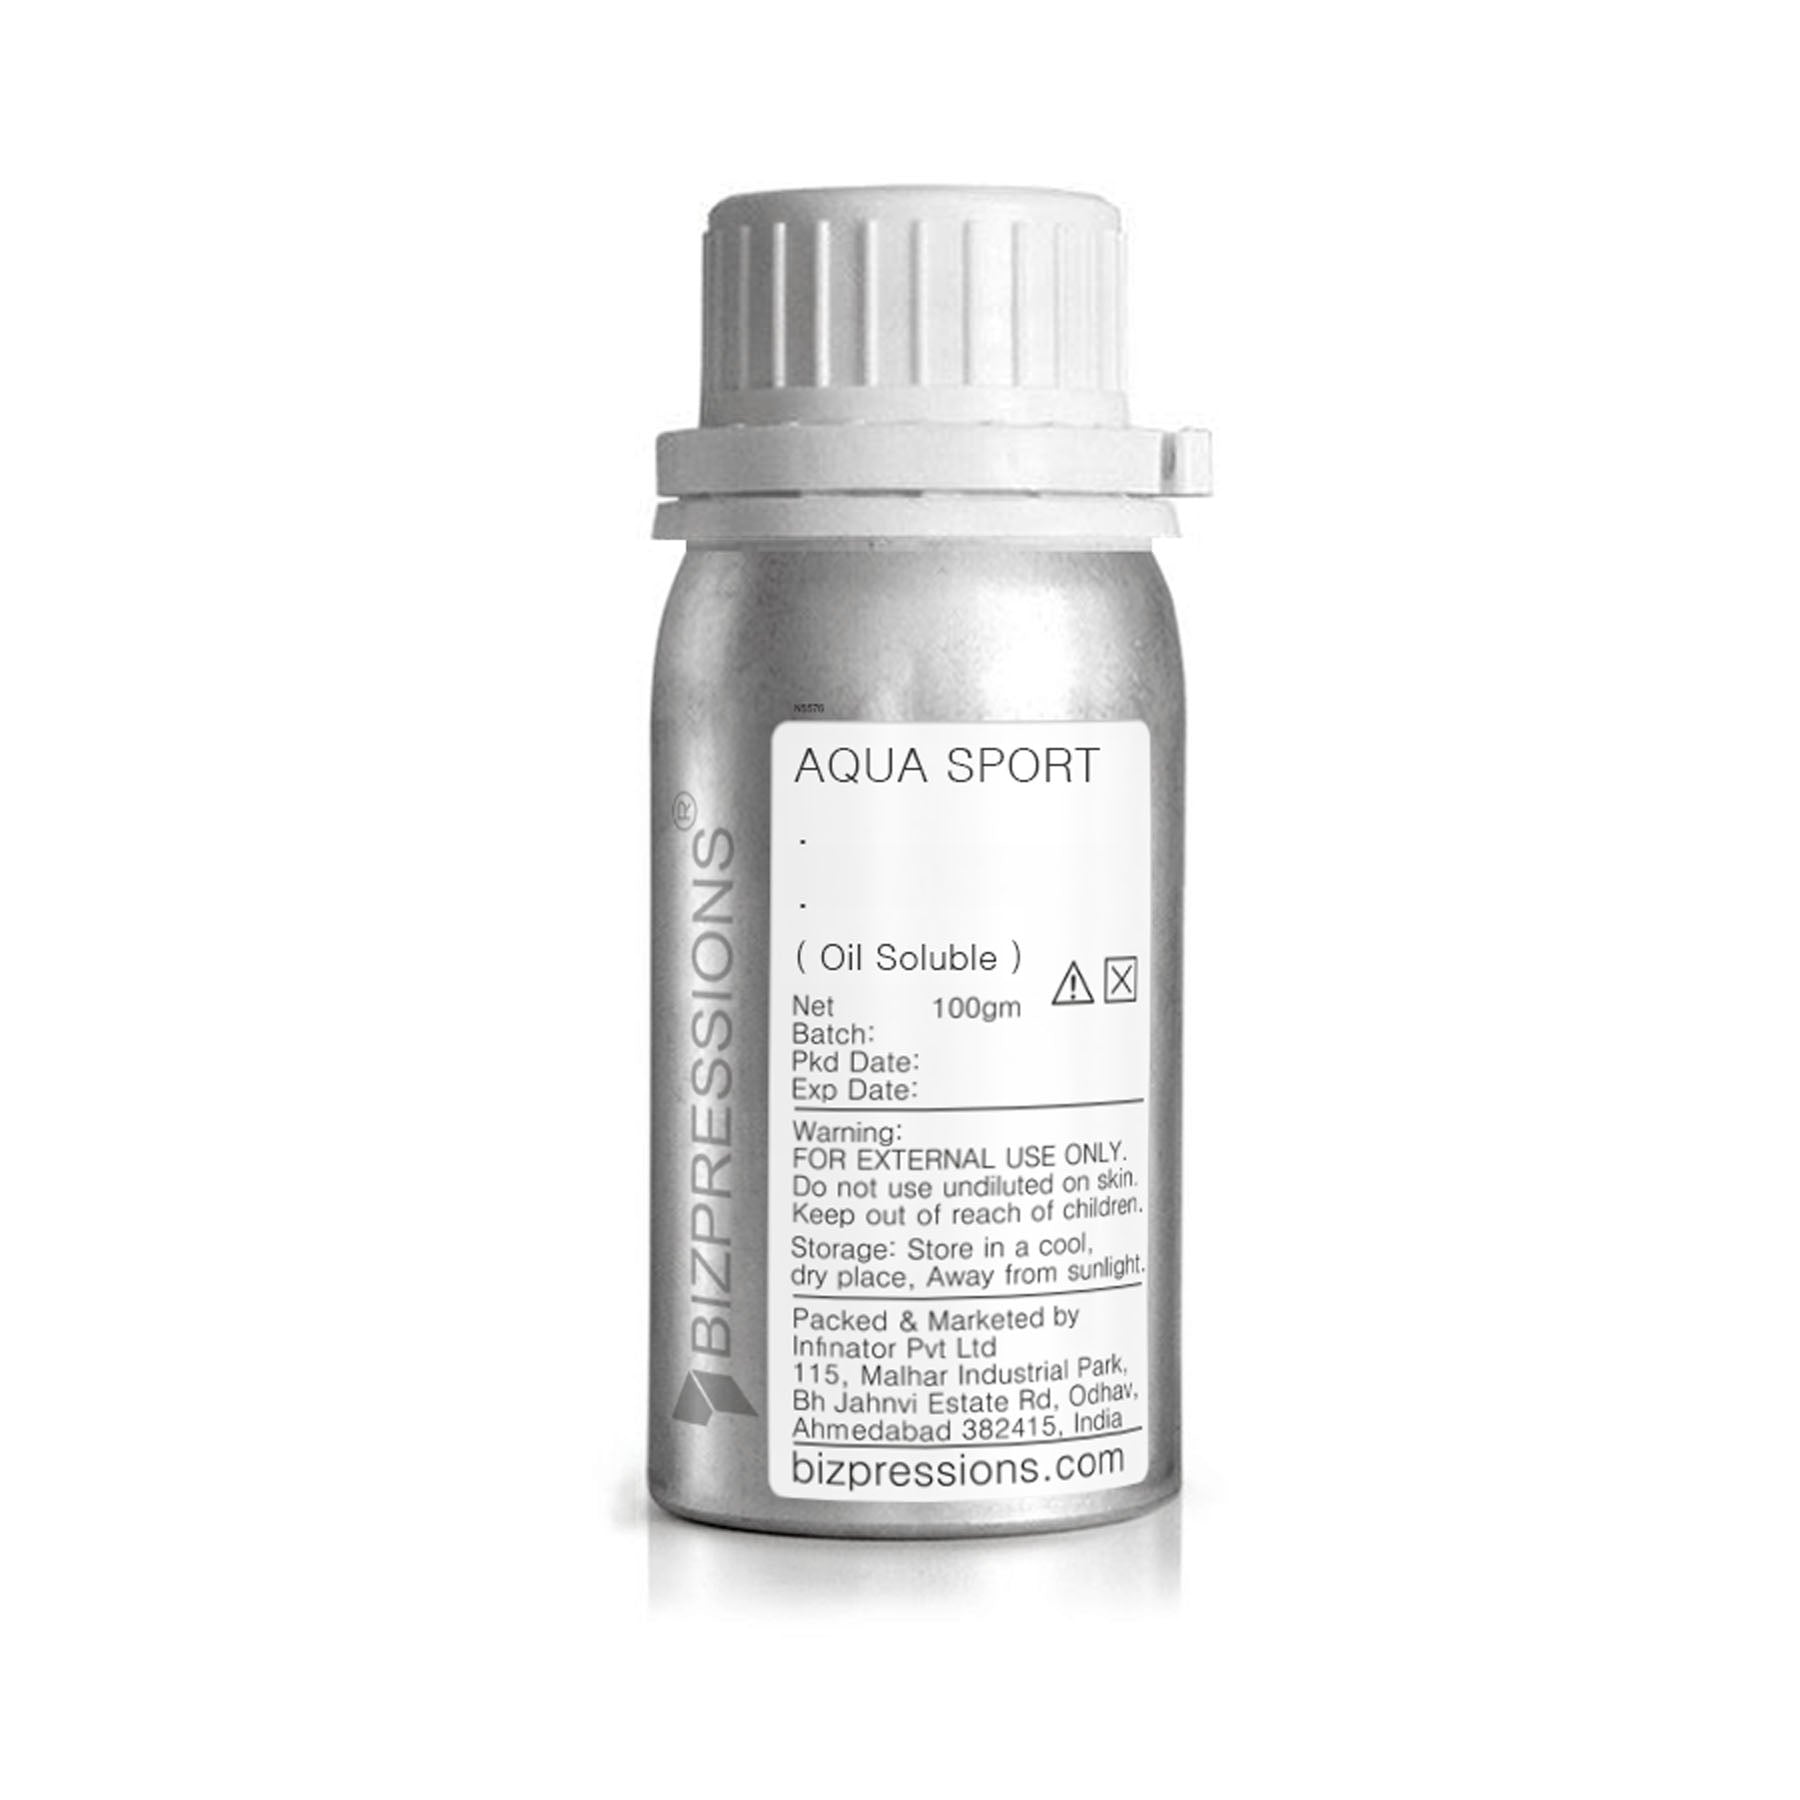 AQUA SPORT - Fragrance ( Oil Soluble ) - 100 gm